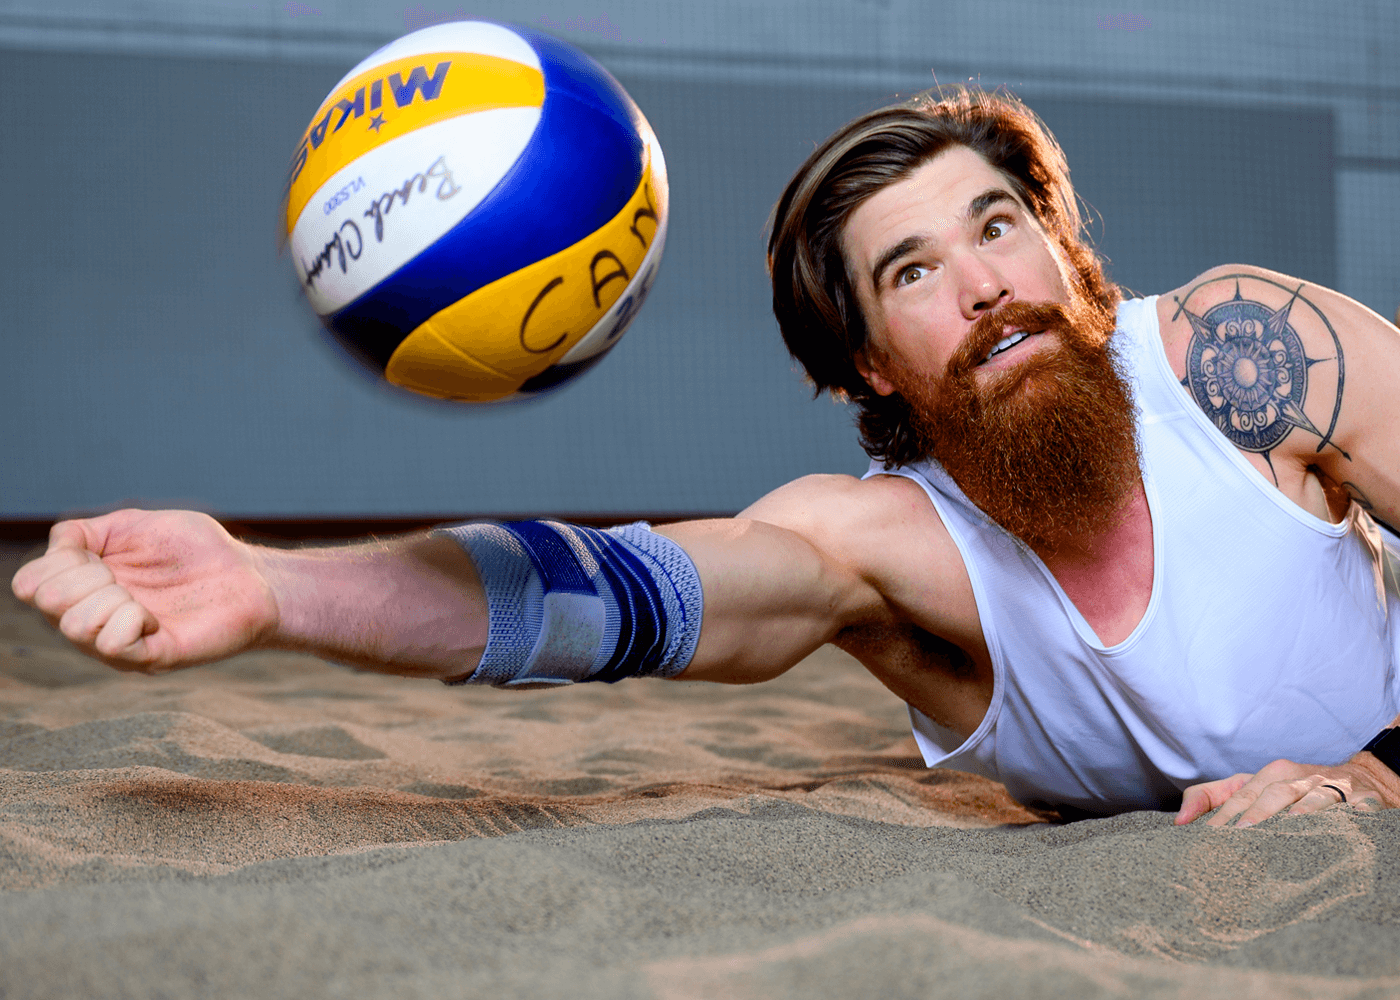 SAM PEDLOW: Professional Beach Volleyball Player